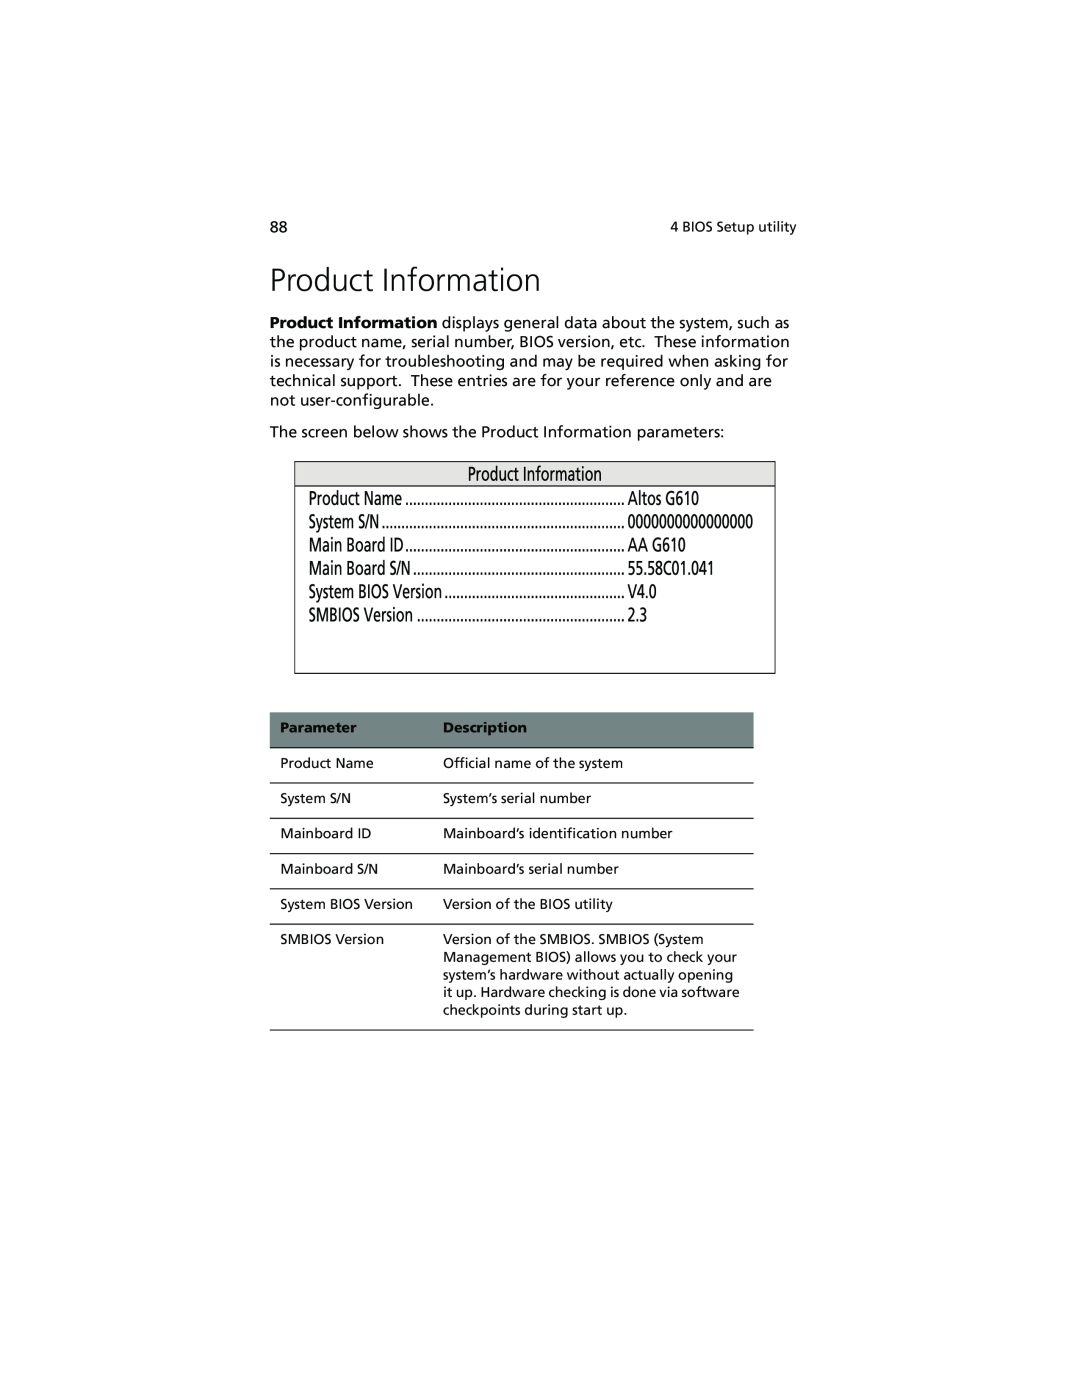 Acer Altos G610 manual Product Information 